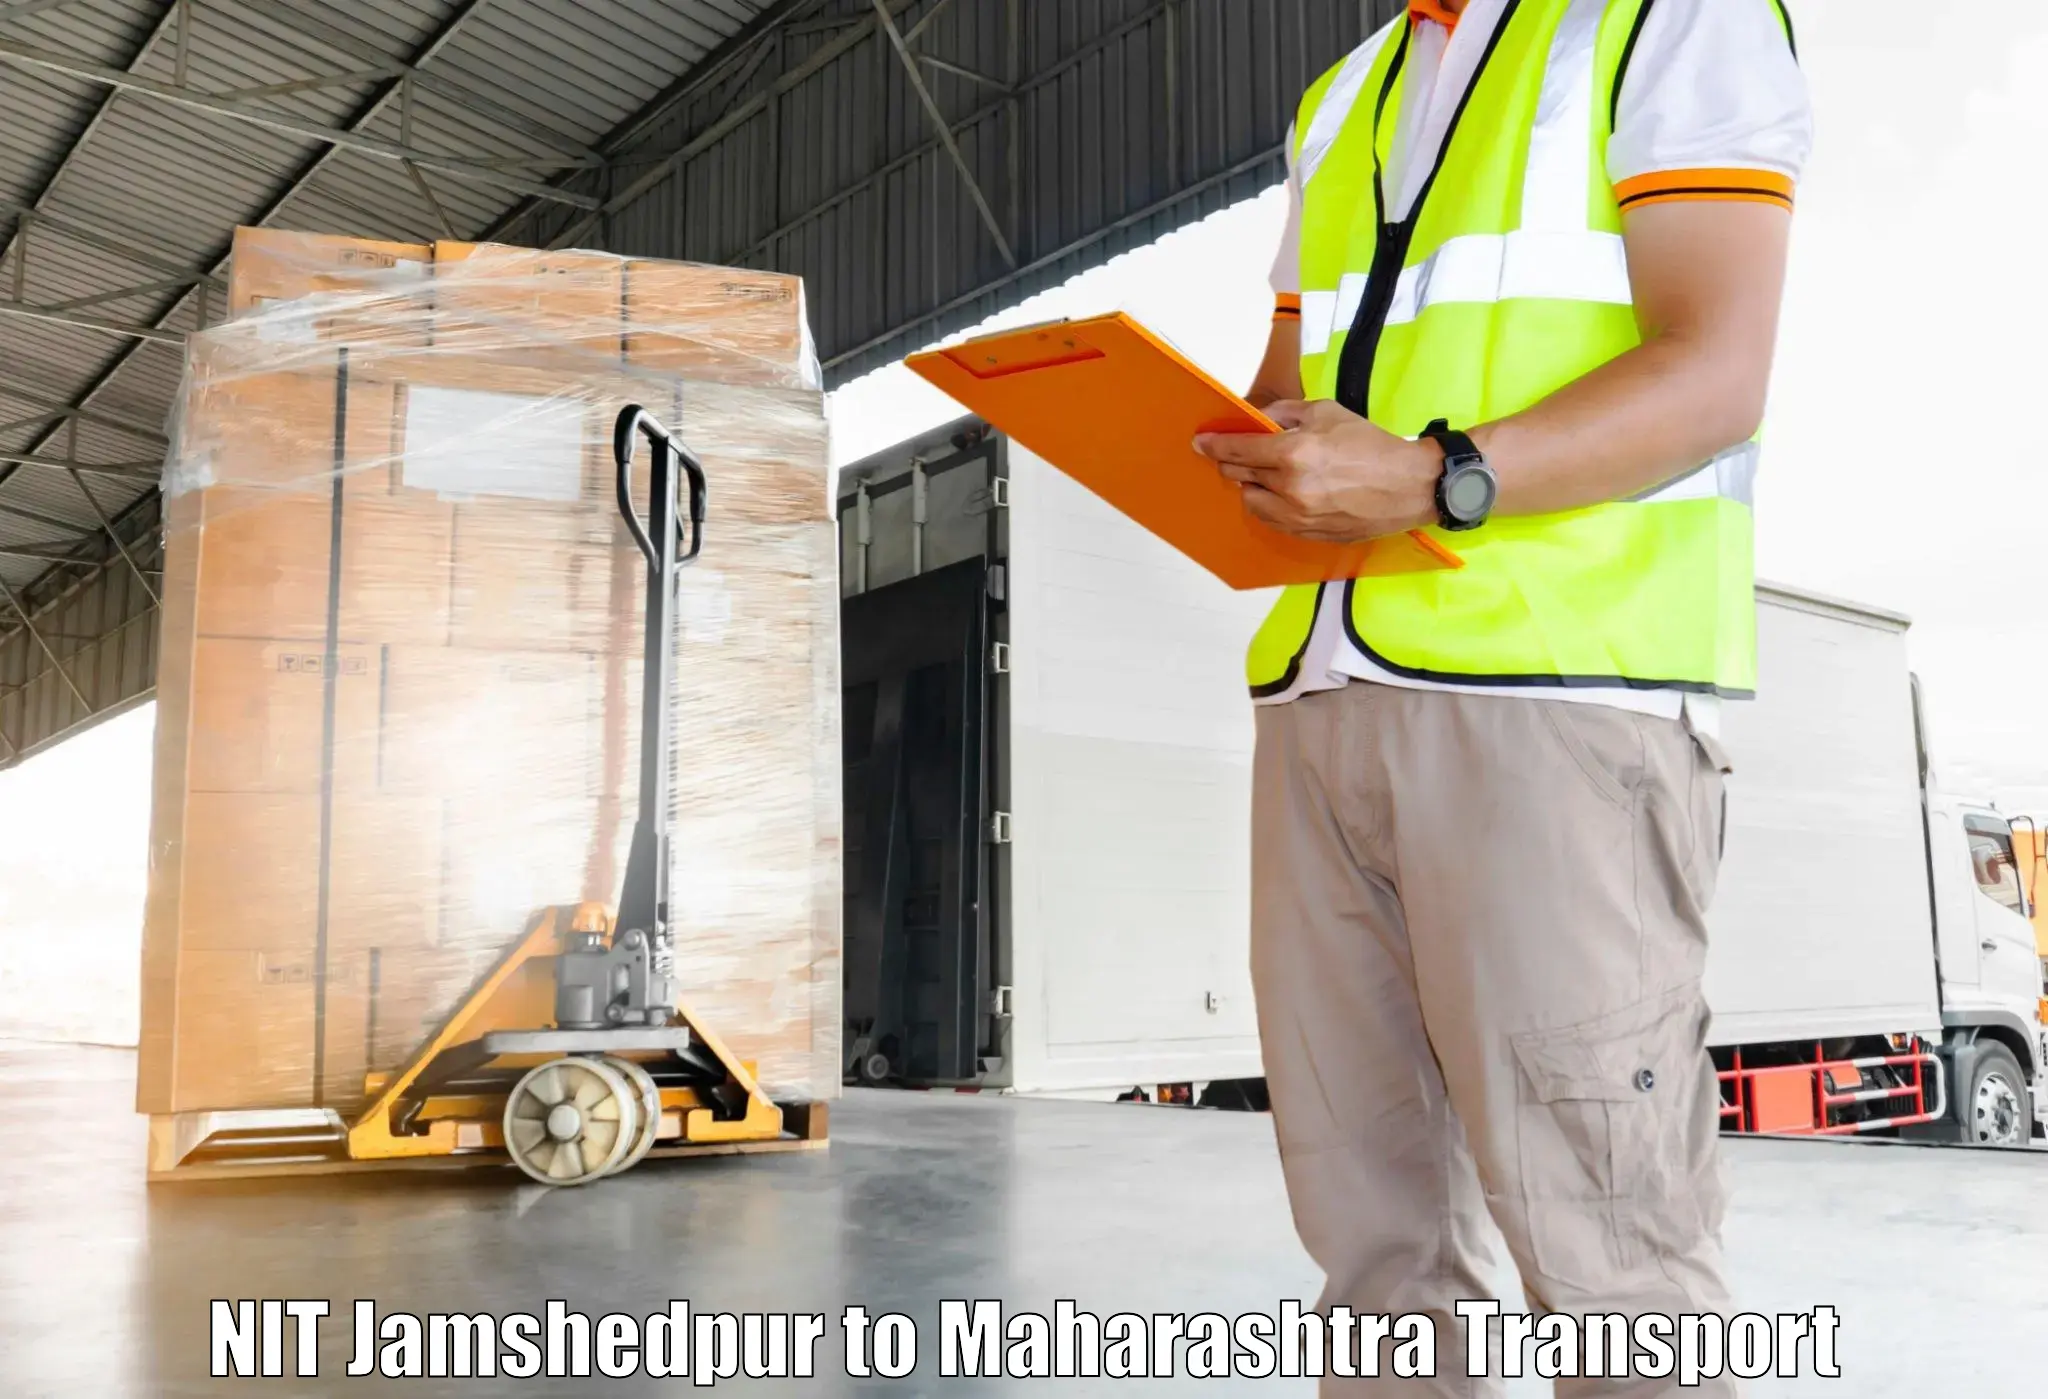 Transport shared services in NIT Jamshedpur to Loni Ahmednagar